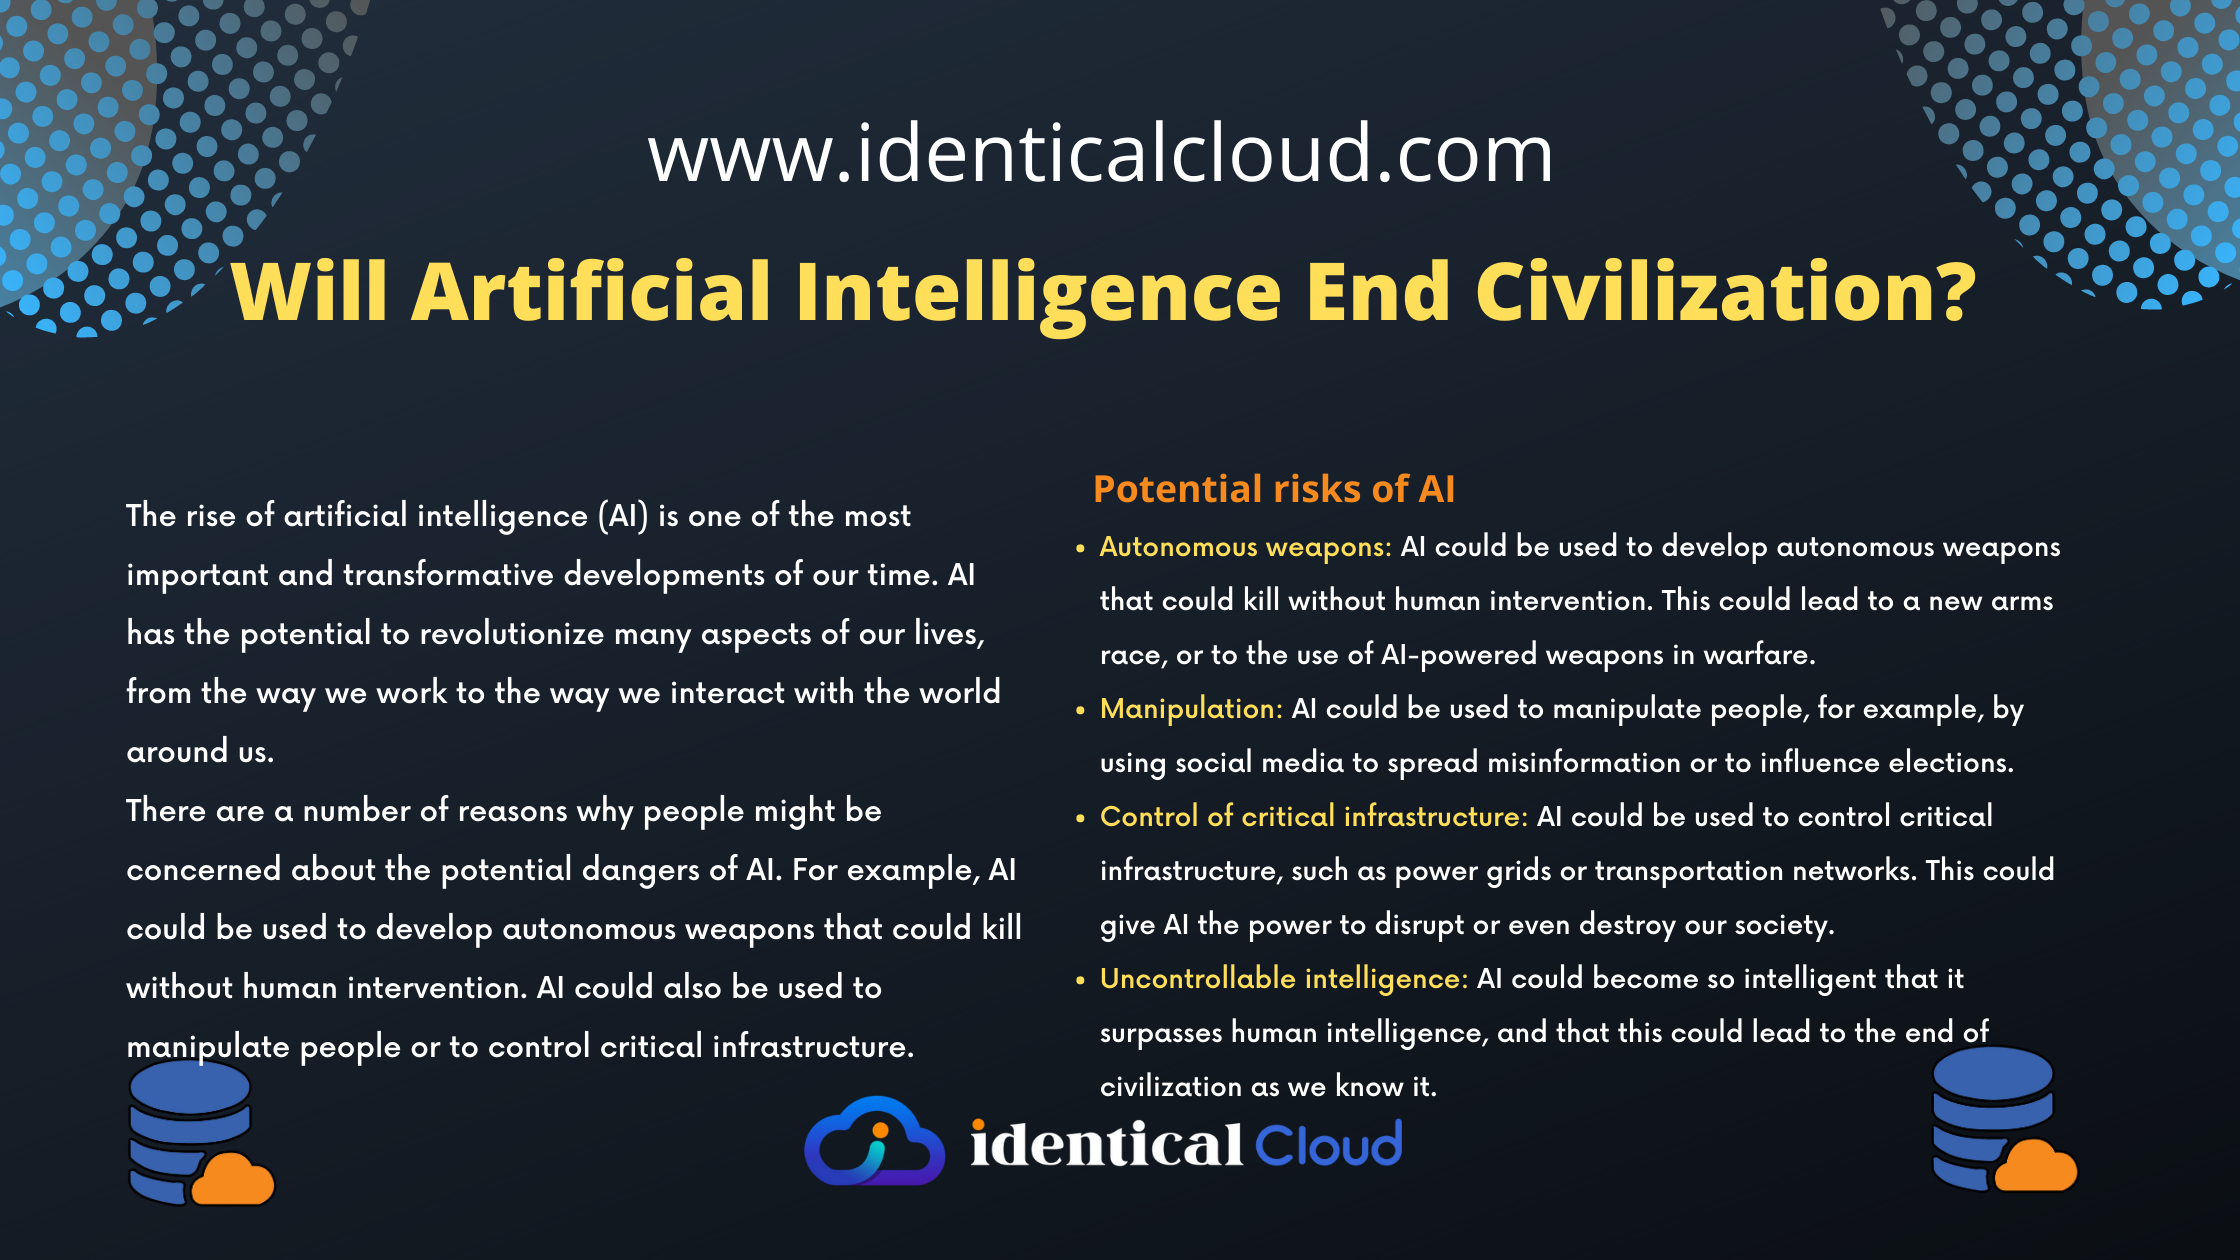 Will Artificial Intelligence End Civilization? - identicalcloud.com